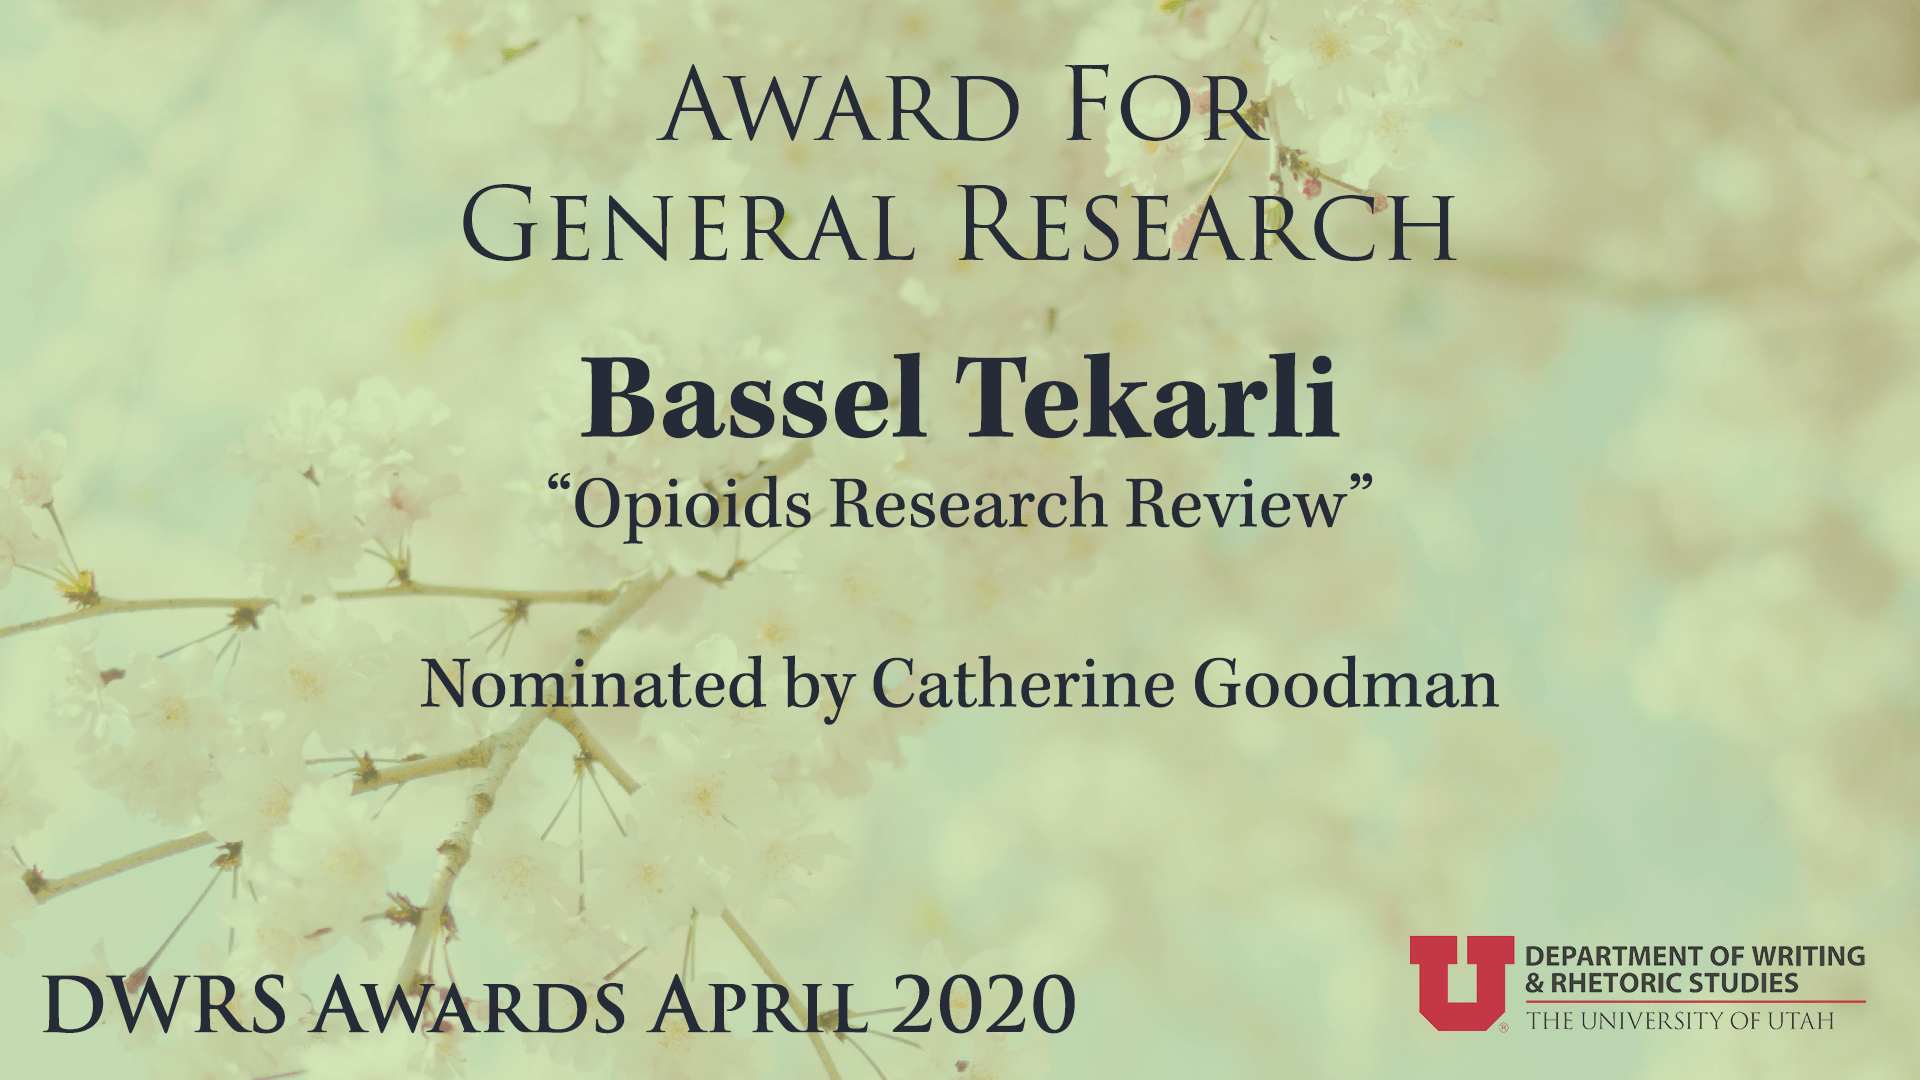 Award for General Research — Bassel Tekarli